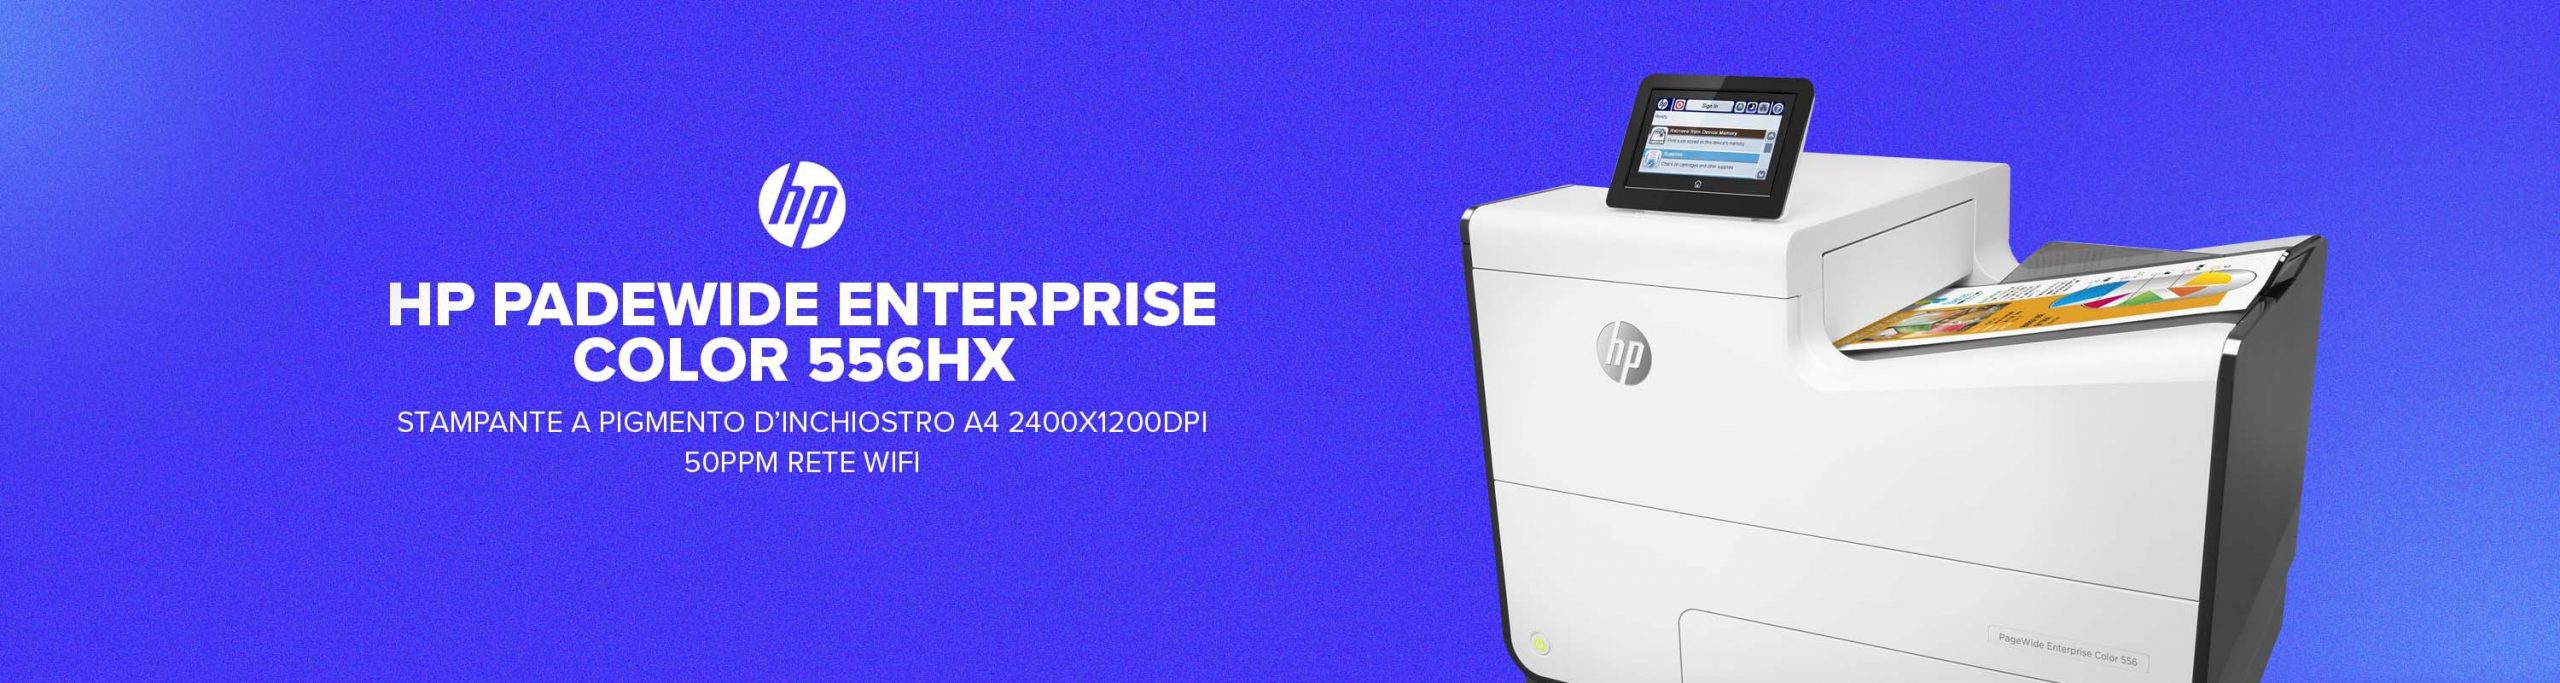 HP PadeWide Enterprise Color 556hx